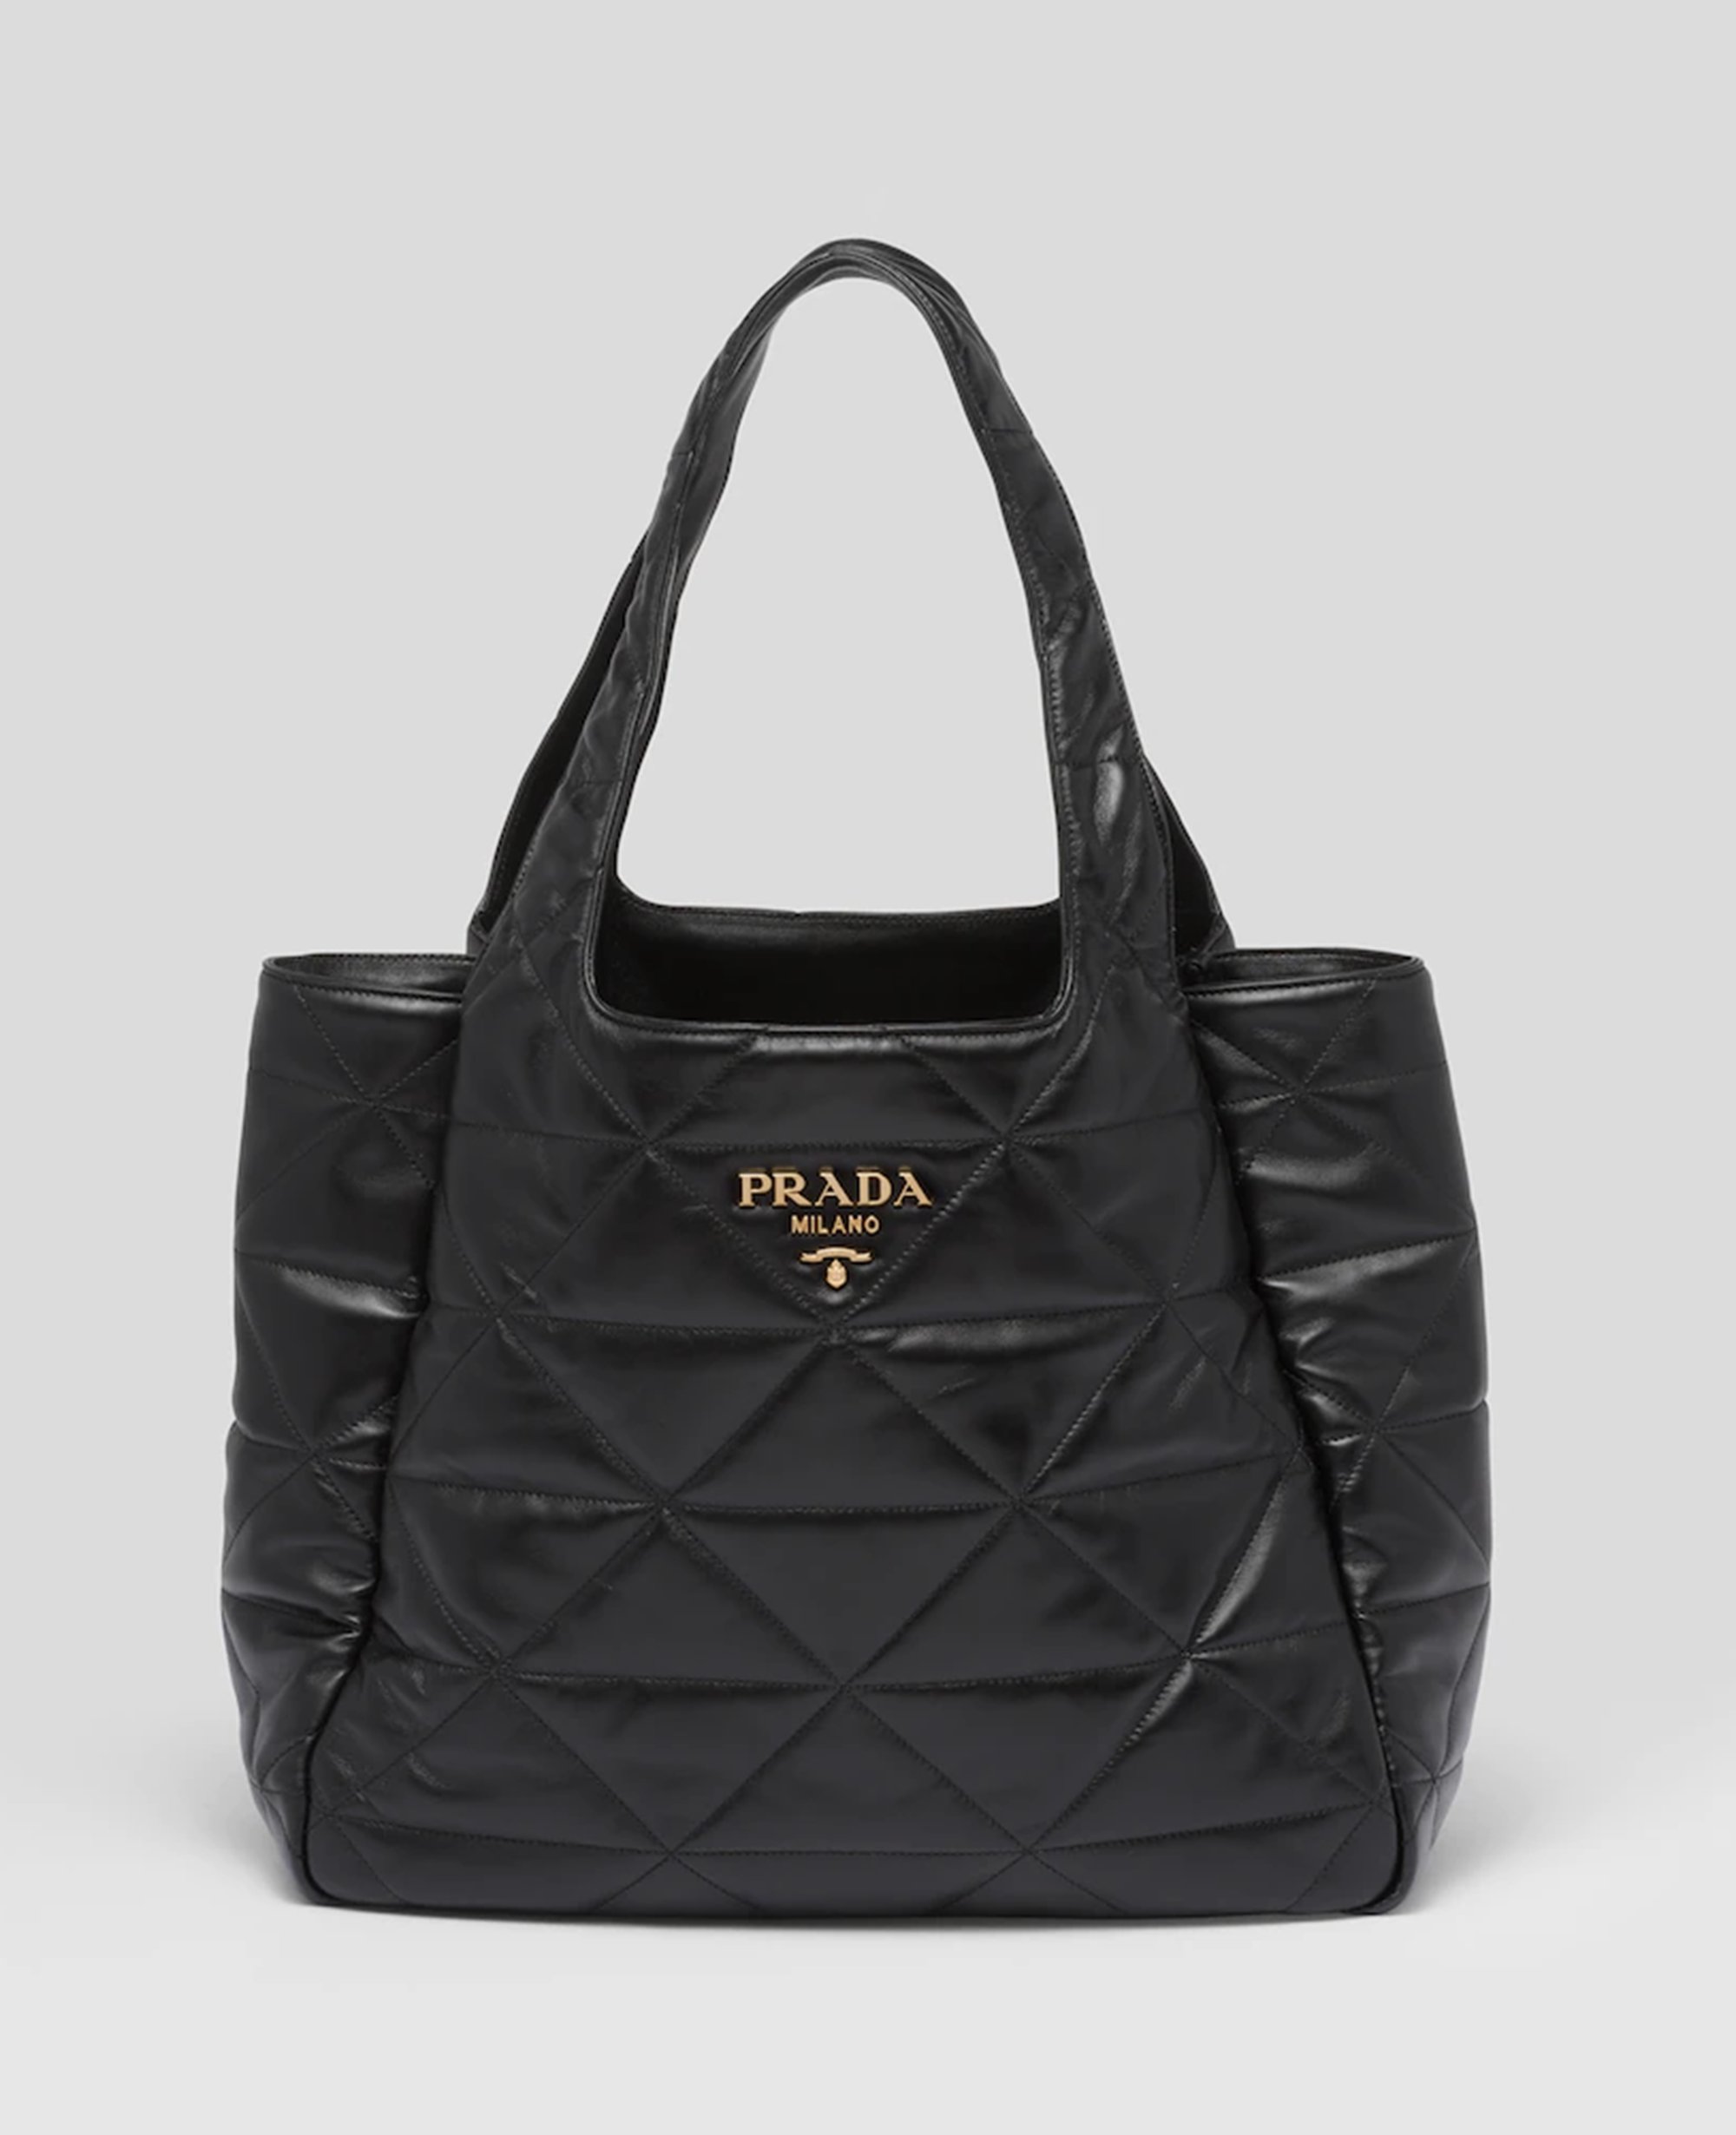 bags similar to prada bag｜TikTok Search